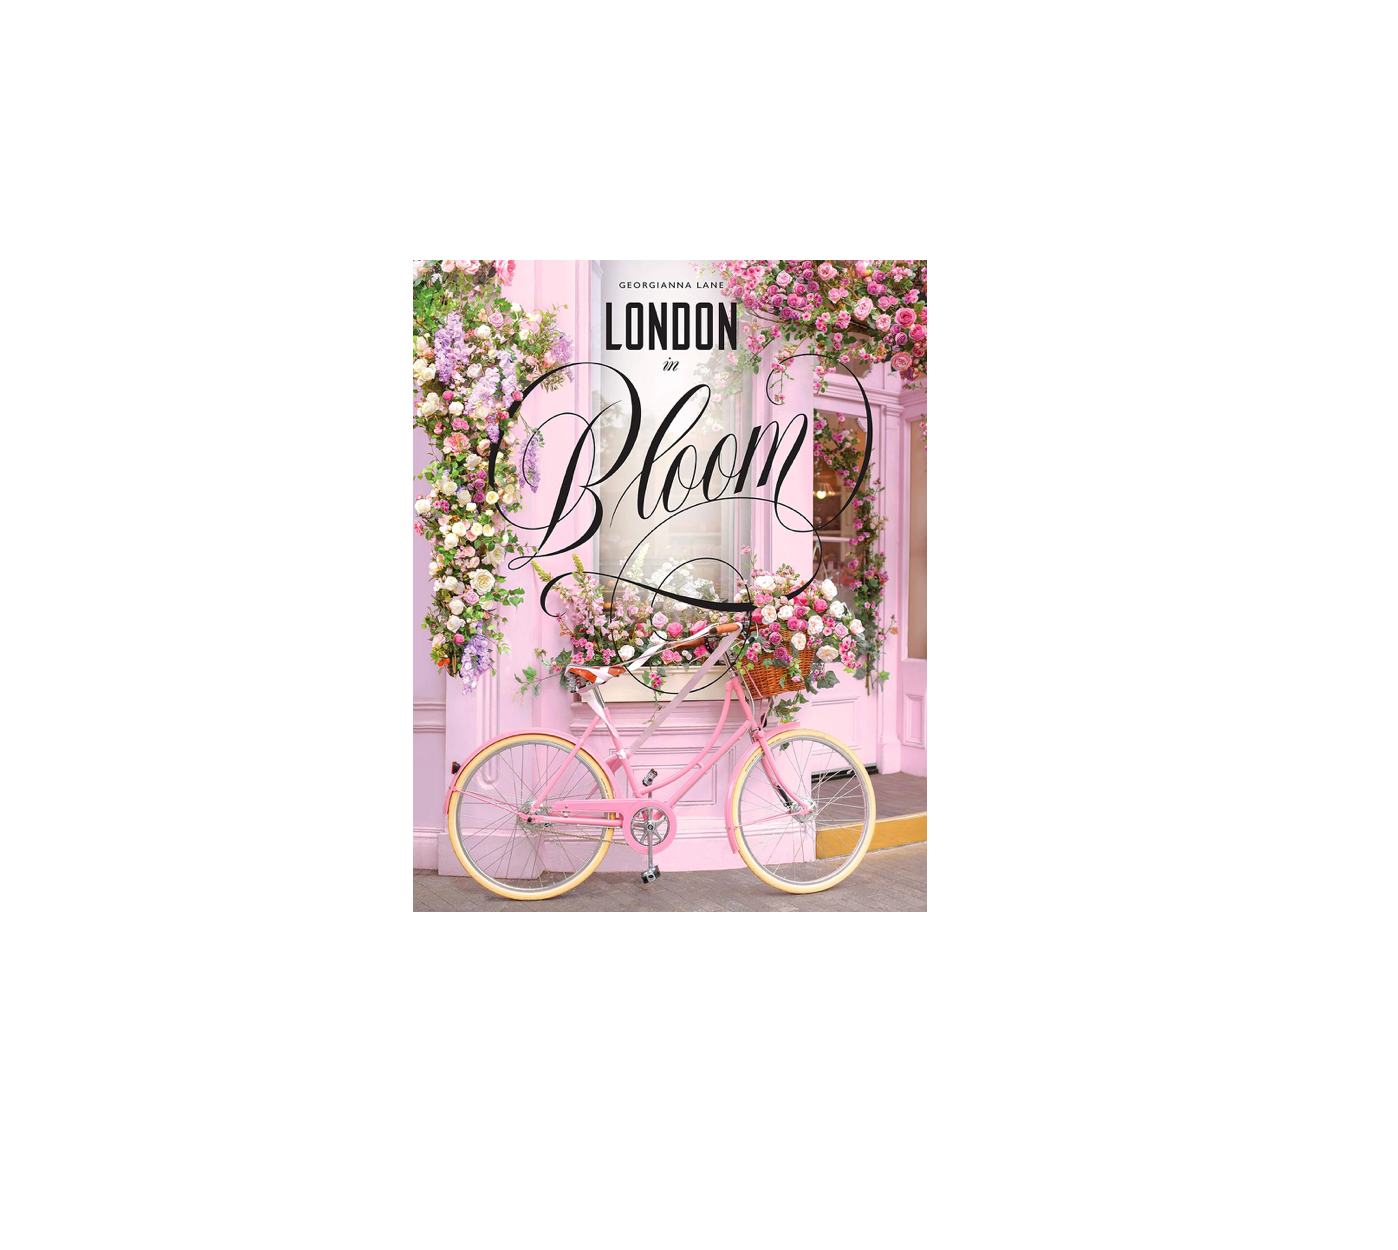 London In bloom by Georgianna Lane